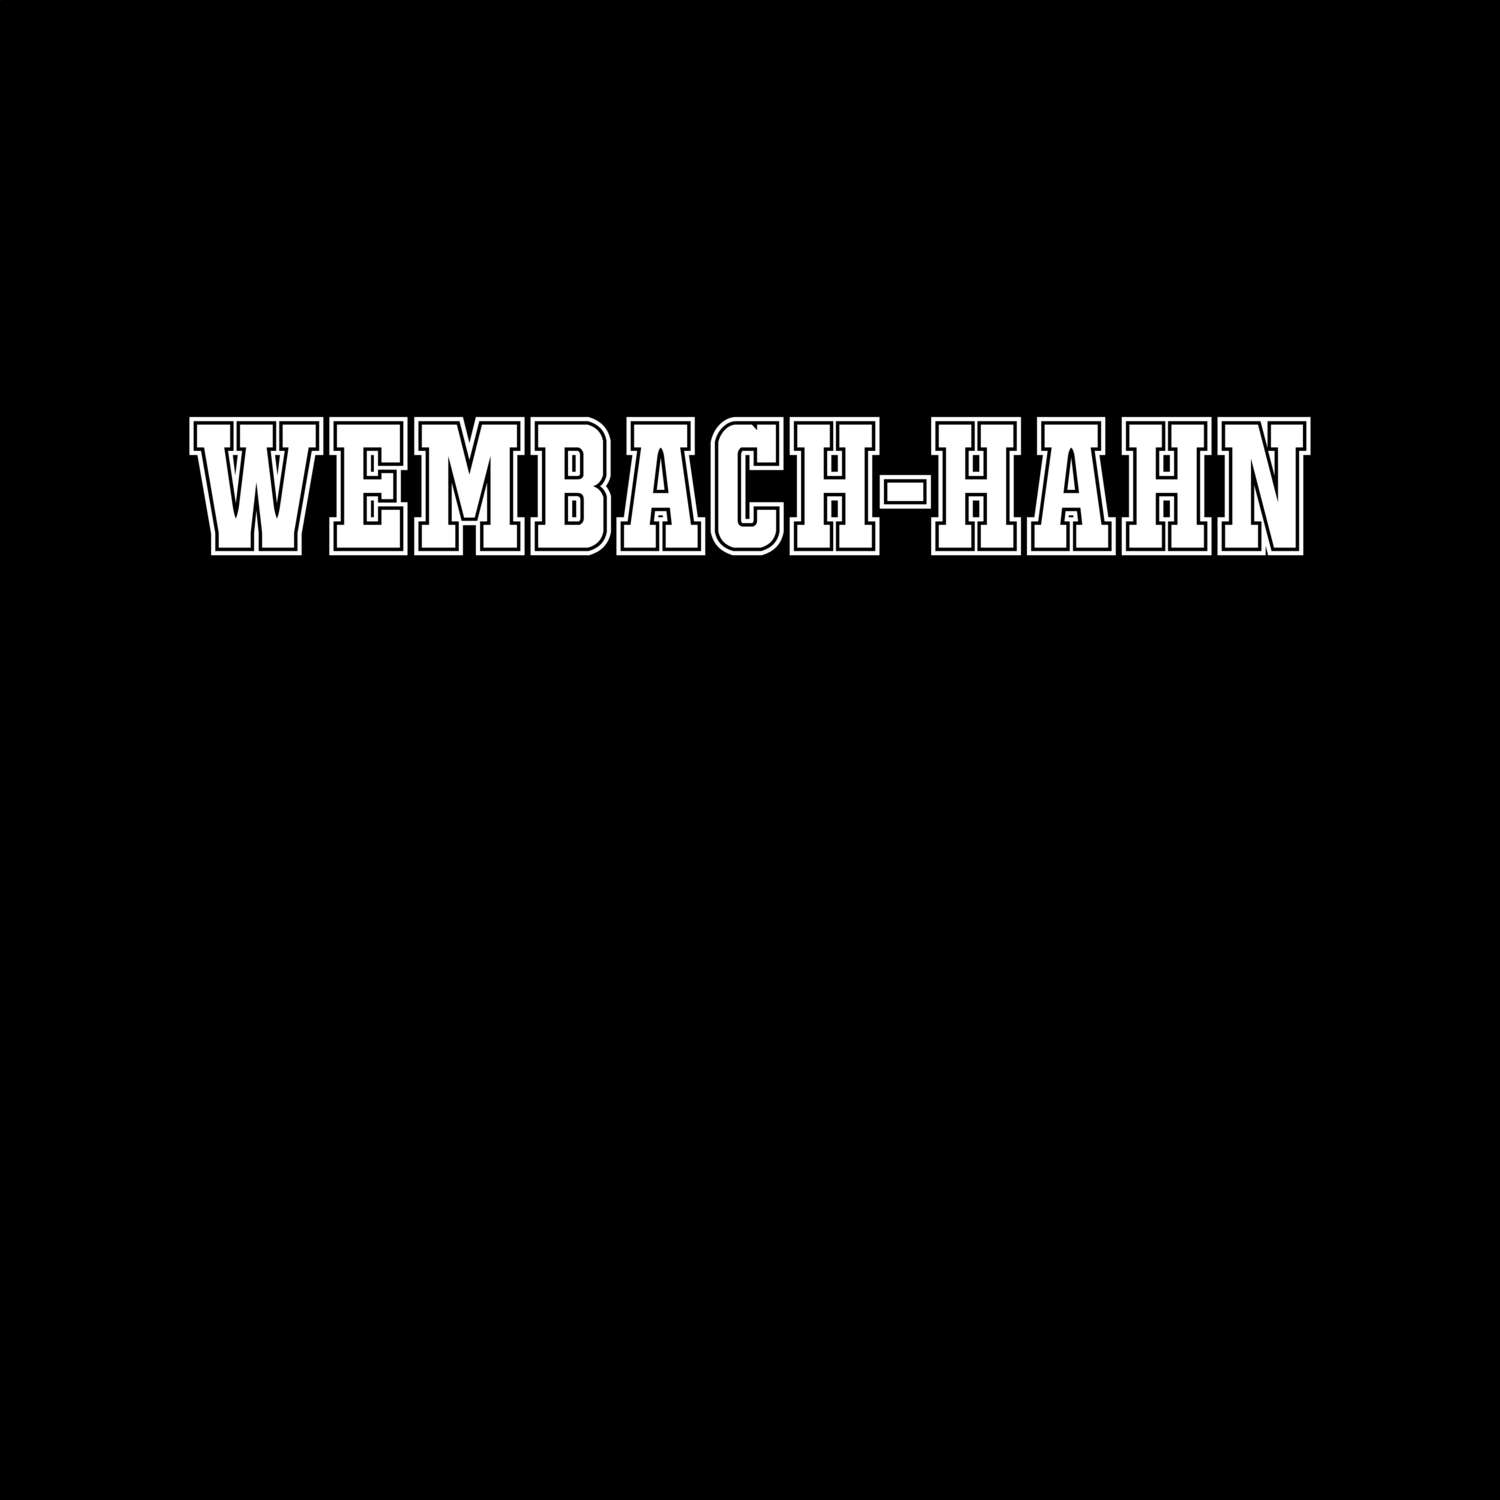 Wembach-Hahn T-Shirt »Classic«